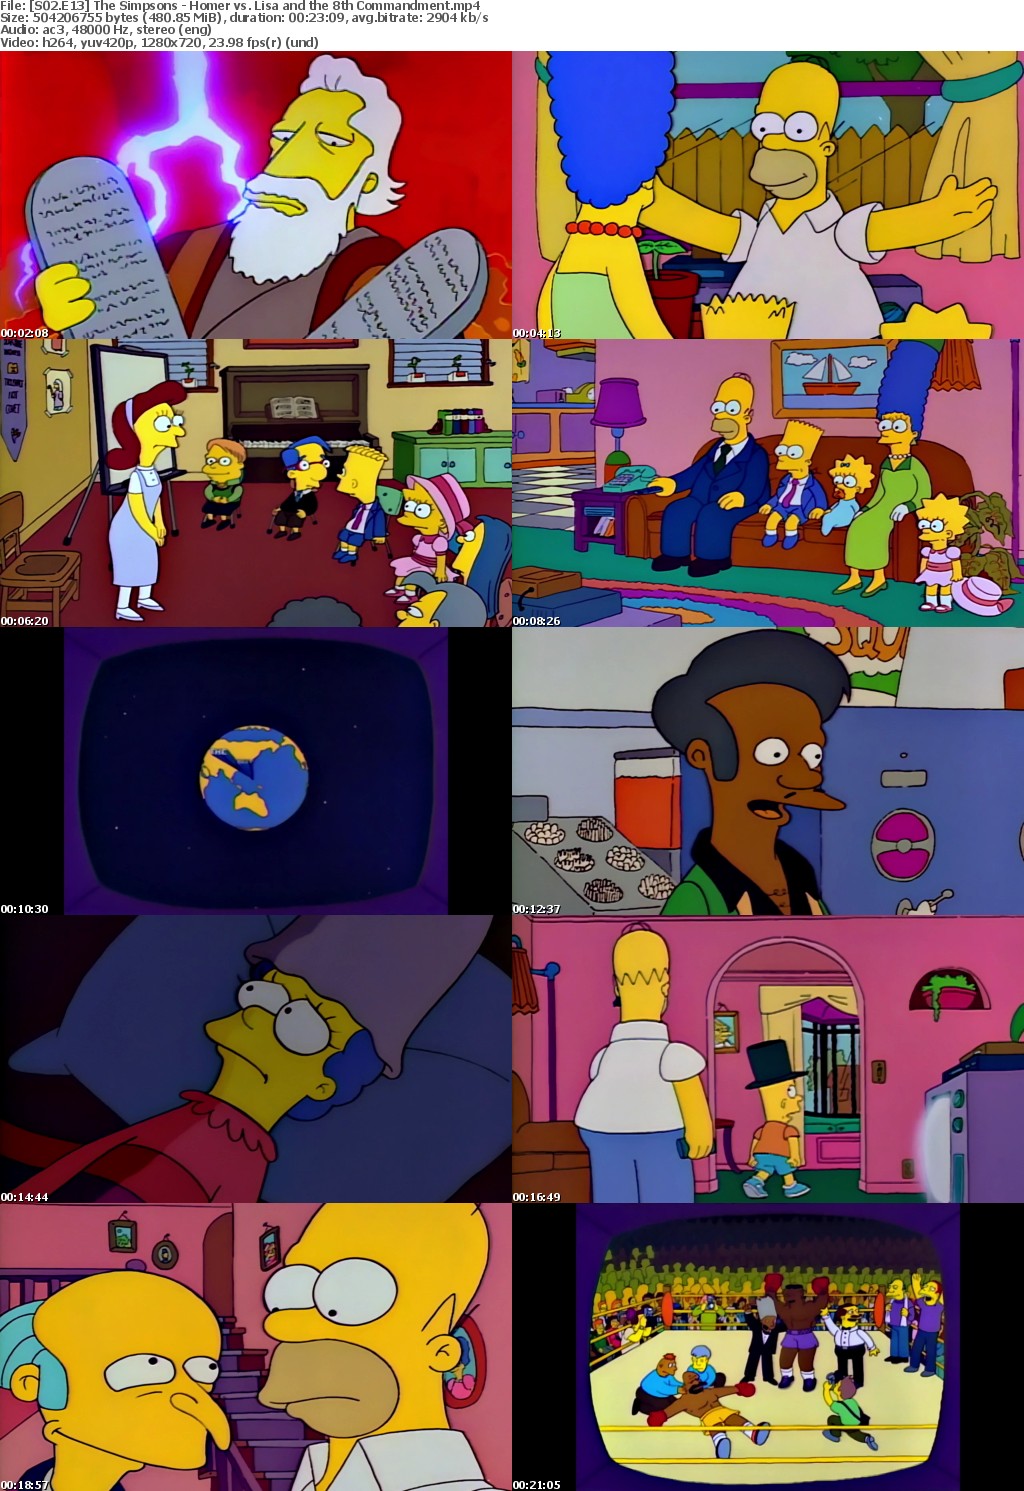 The Simpsons S2 E13 Homer vs Lisa and the 8th Commandment MP4 720p H264 WEBRip EzzRips